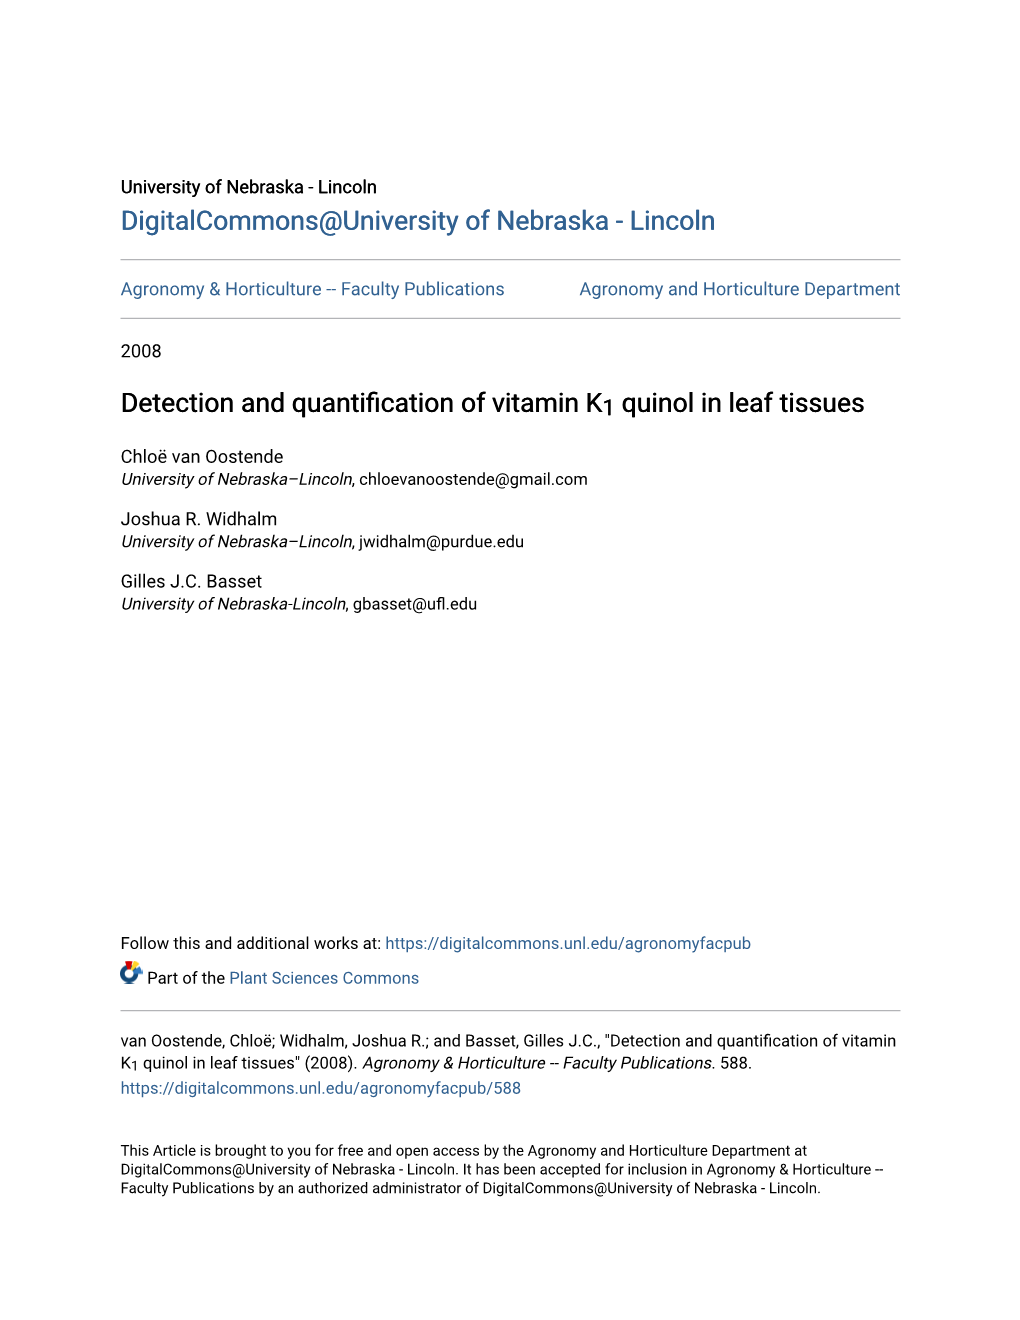 Detection and Quantification of Vitamin K&lt;Sub&gt;1&lt;/Sub&gt; Quinol in Leaf Tissues